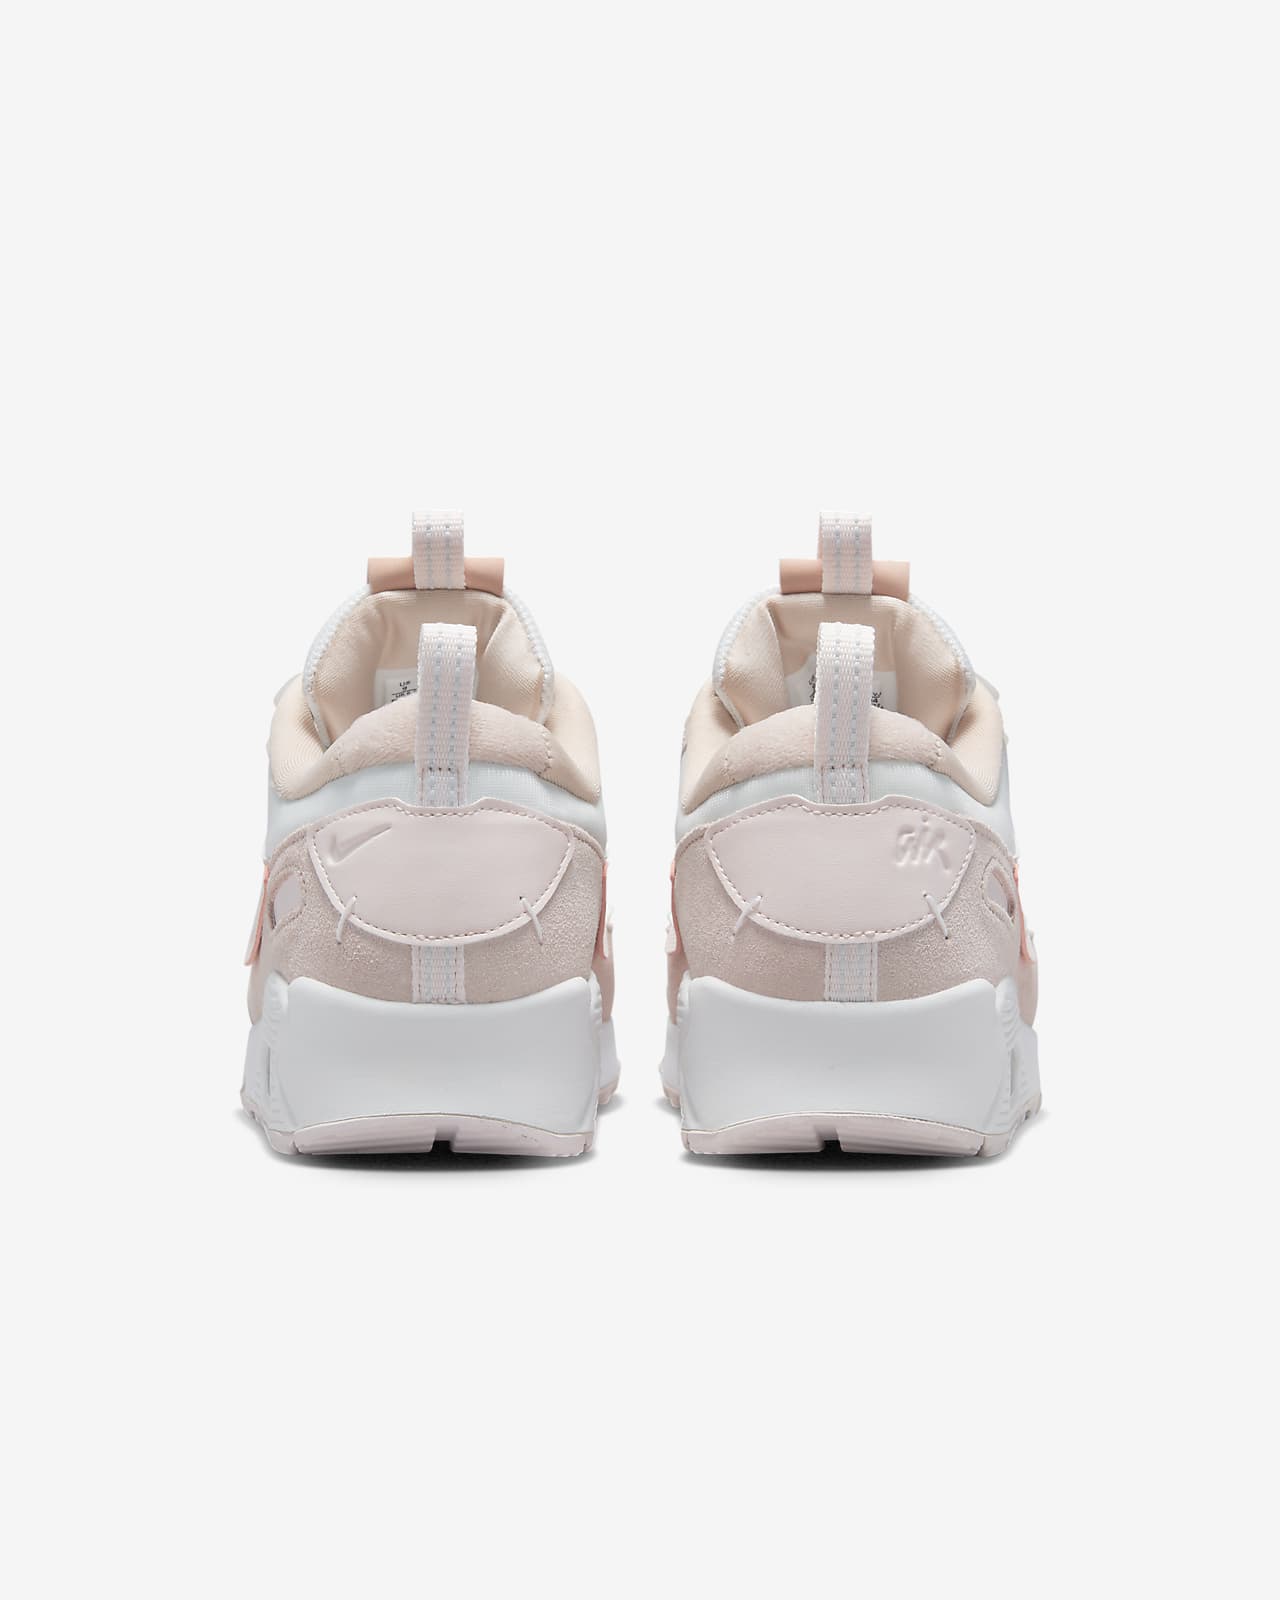 Nike Presents Its New Air Max 90 Futura Sneaker